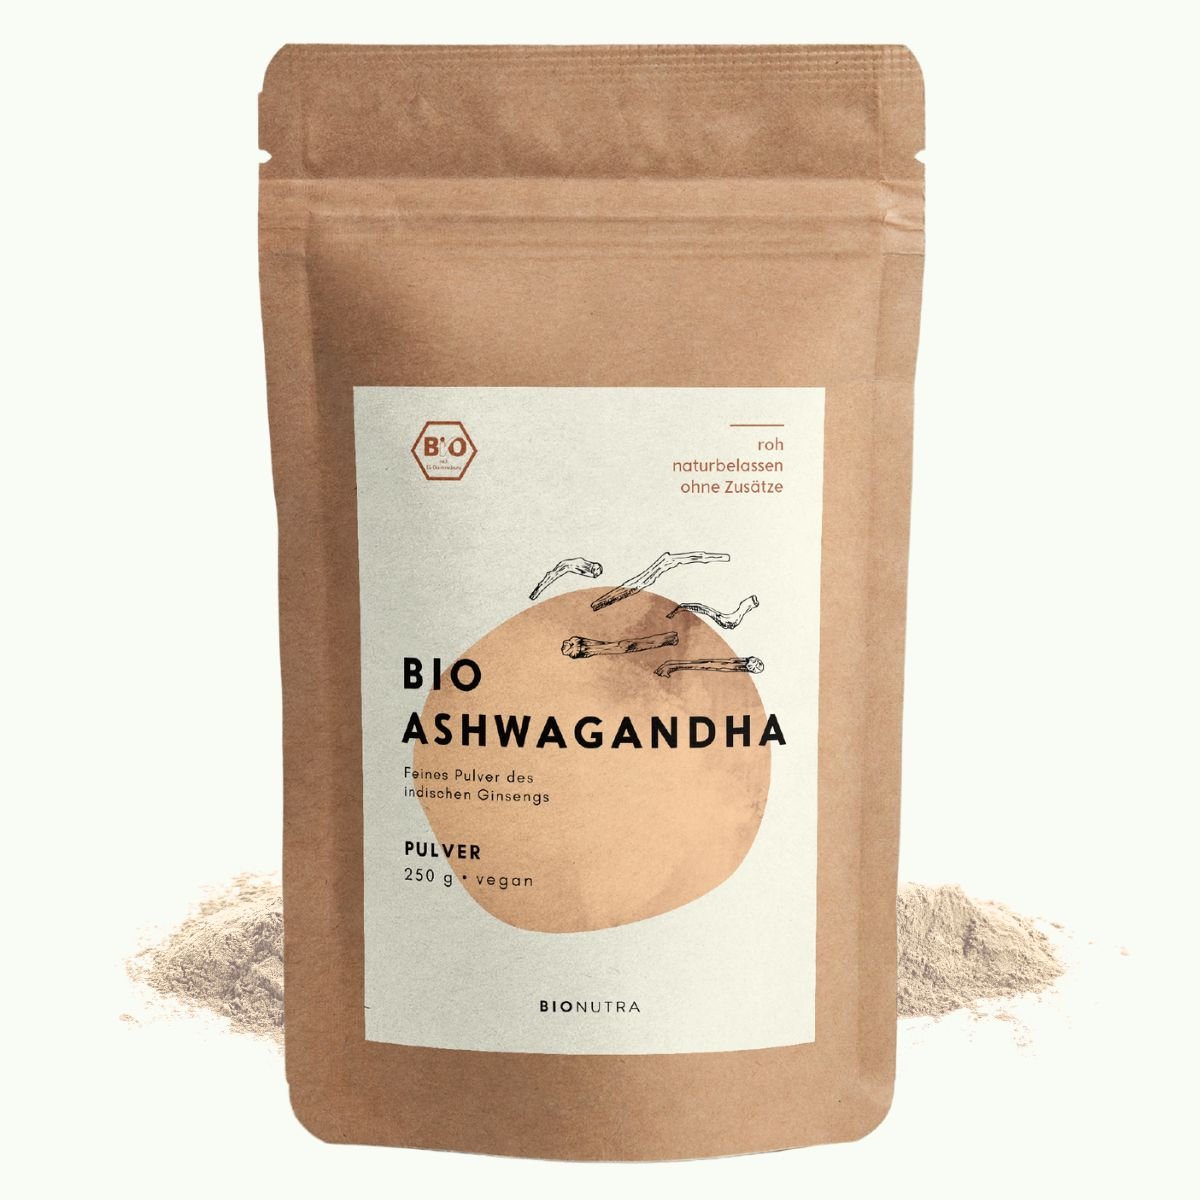 bio-ashwagndha-pulver-250-g-faire-produktion-aus-sri-lanka